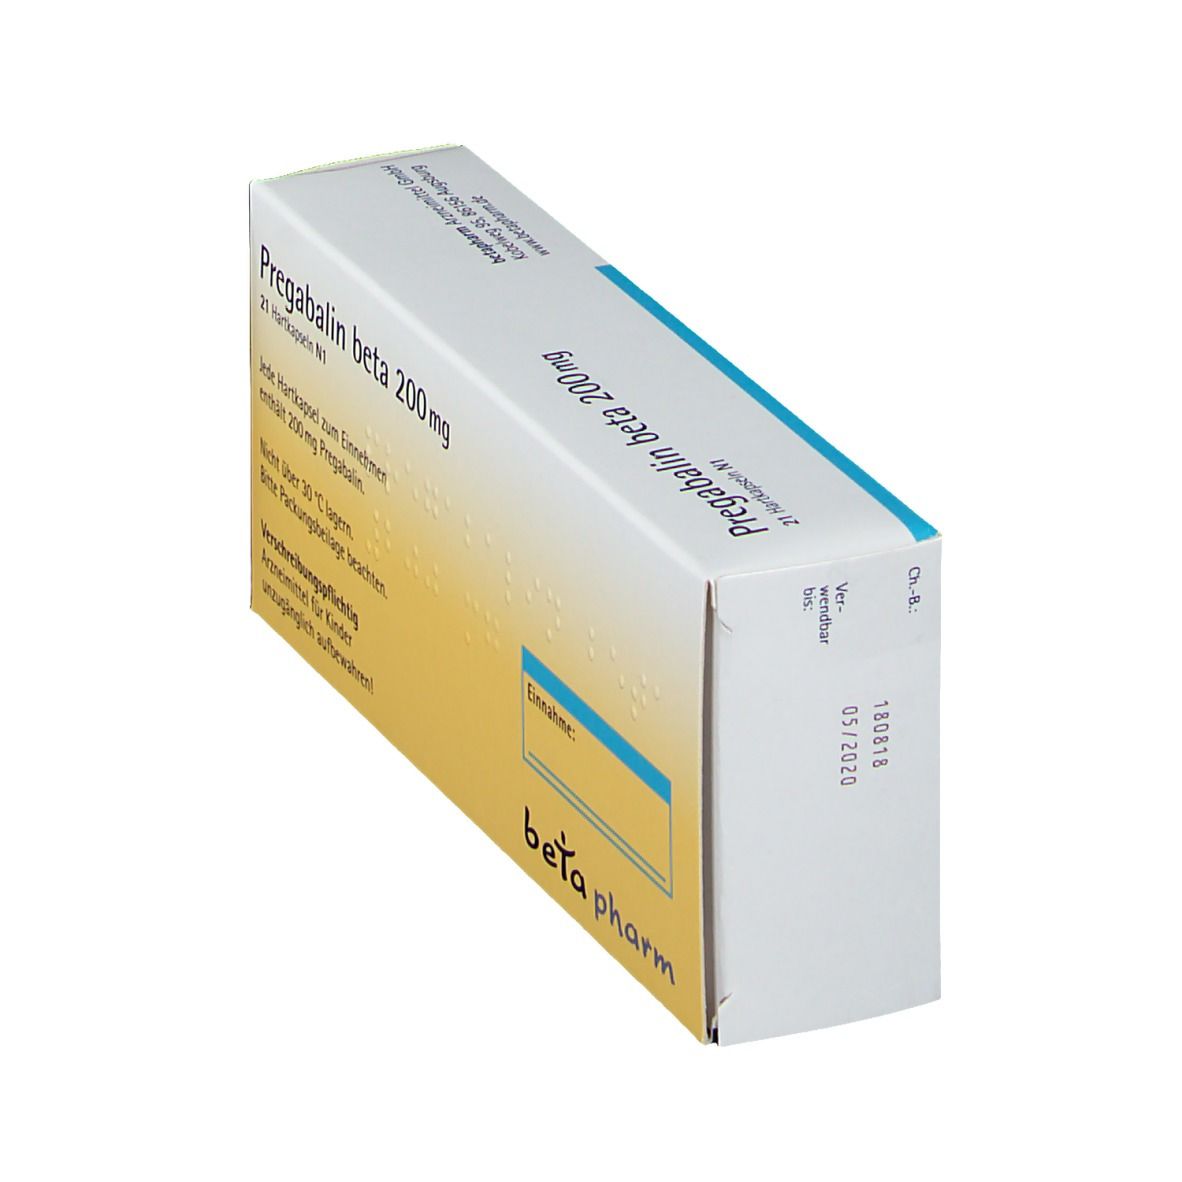 Pregabalin beta 200 mg